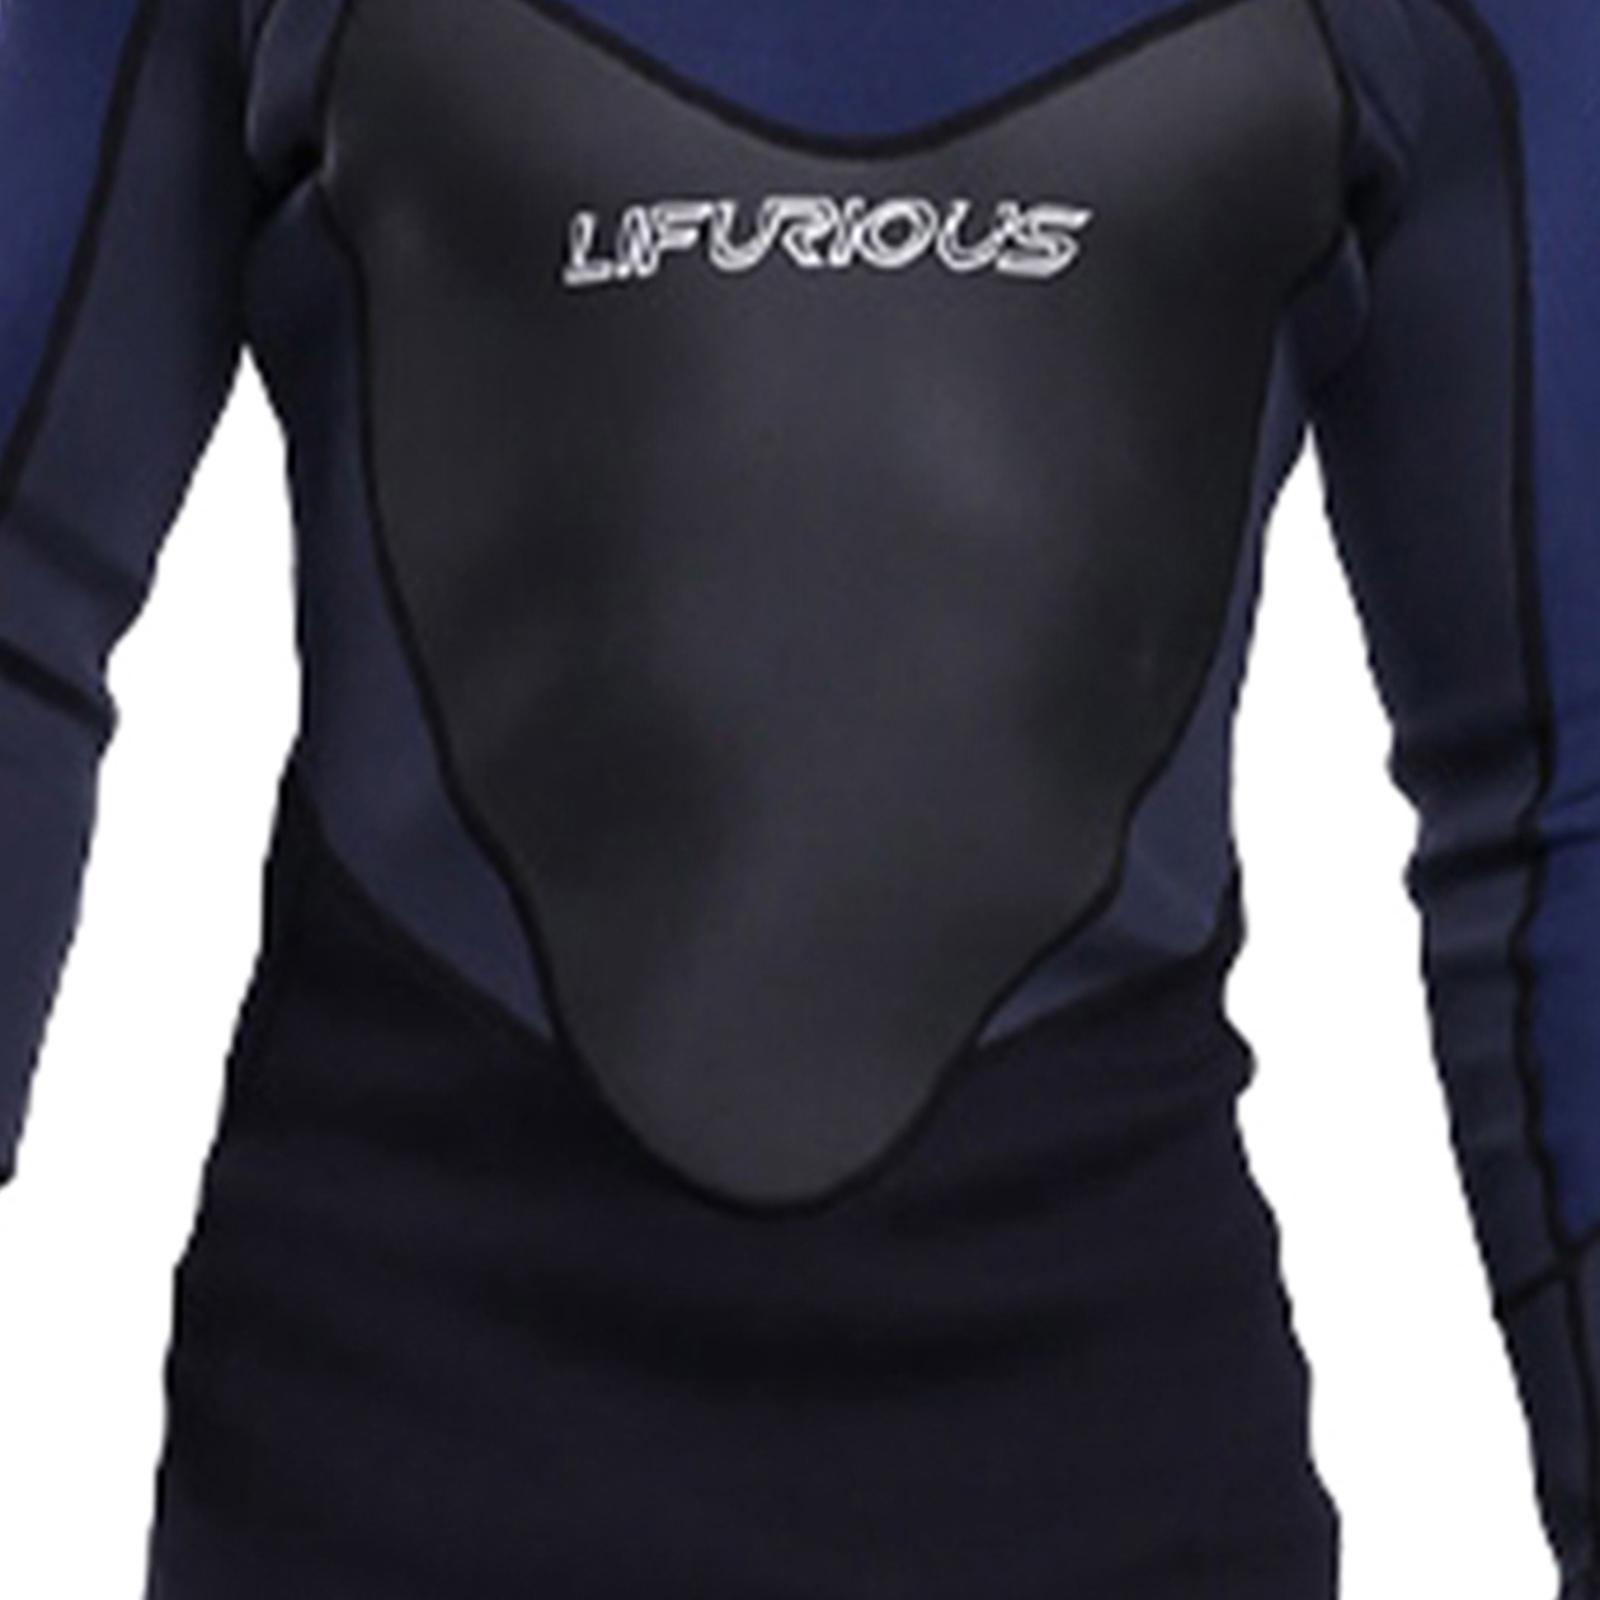 Neoprene Full Body Wetsuits Long Sleeve Surfing Swimming Diving Swimsuit S